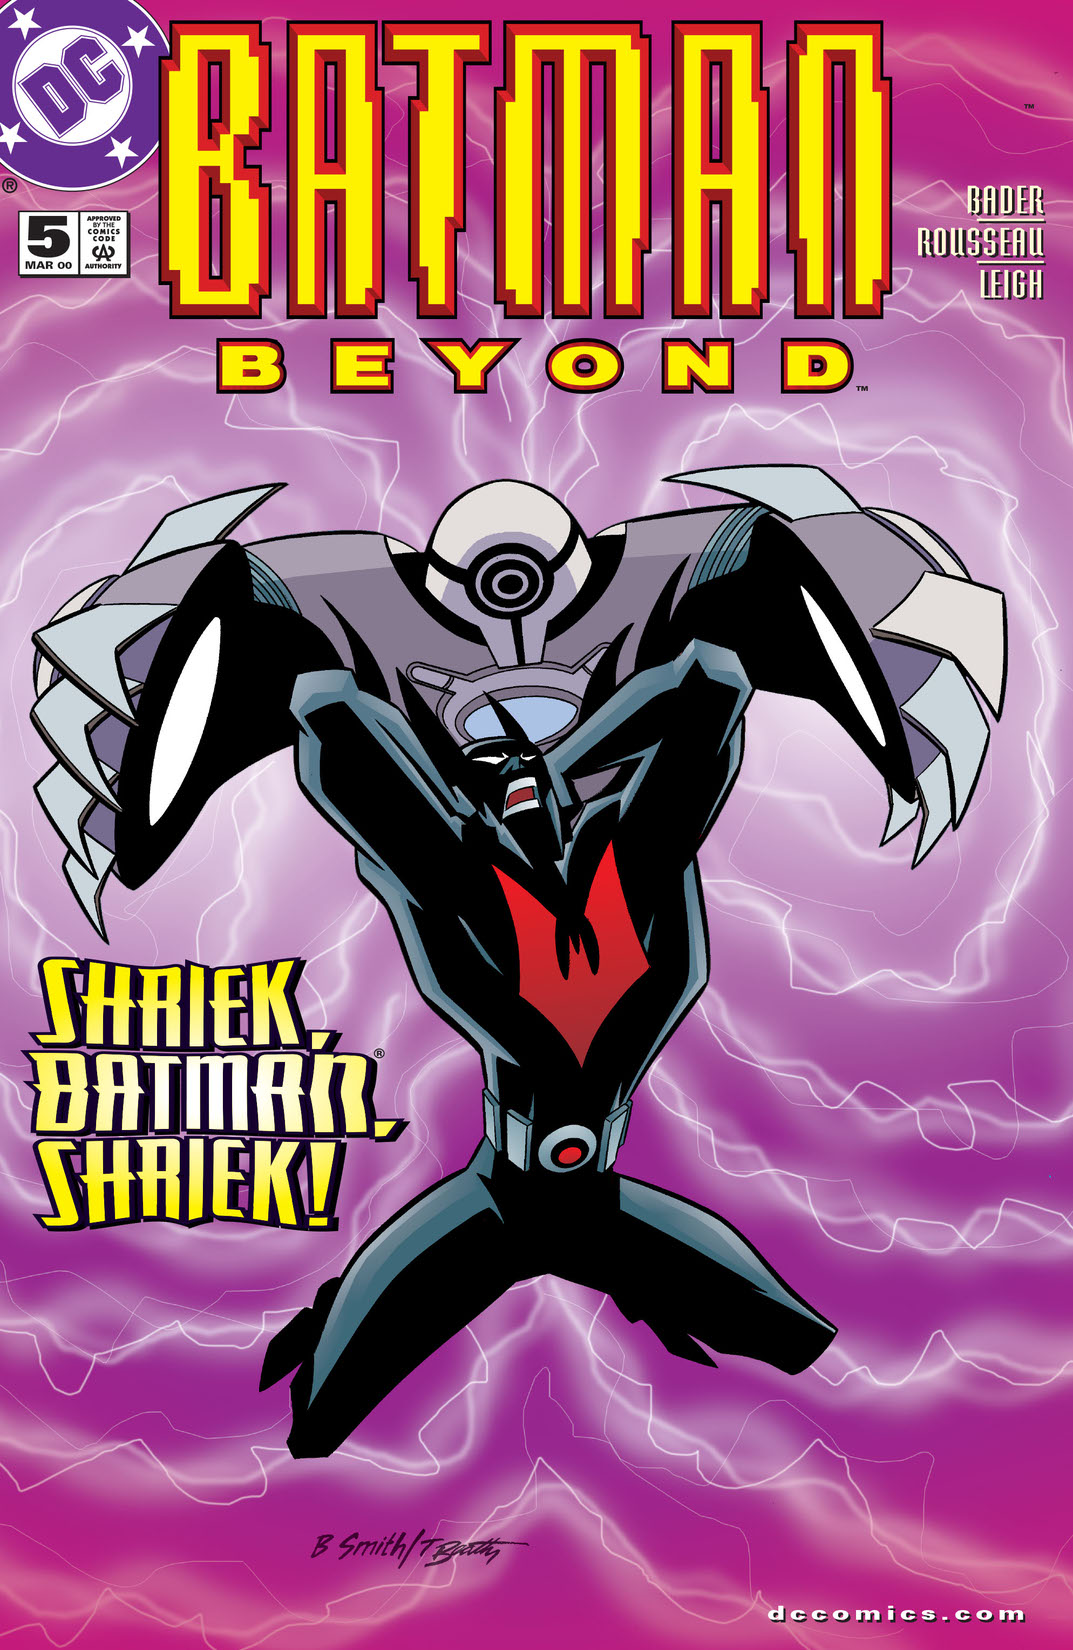 Batman Beyond (1999-) #5 preview images